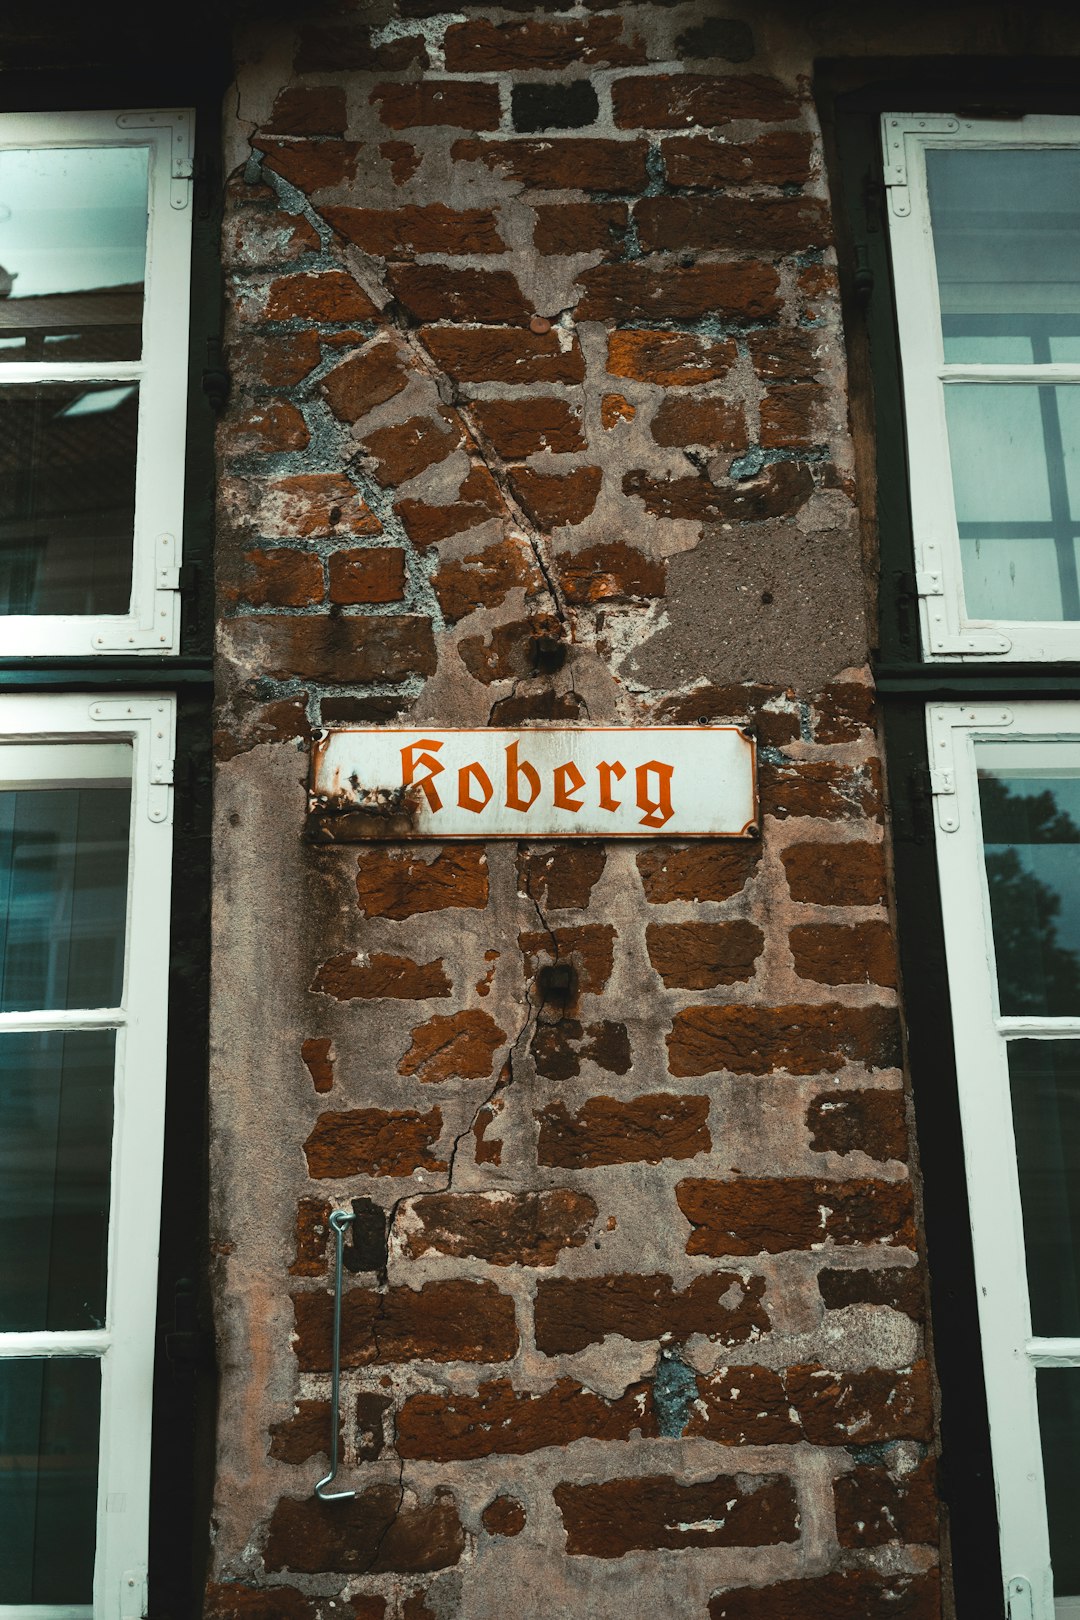 Koberg signage on wall